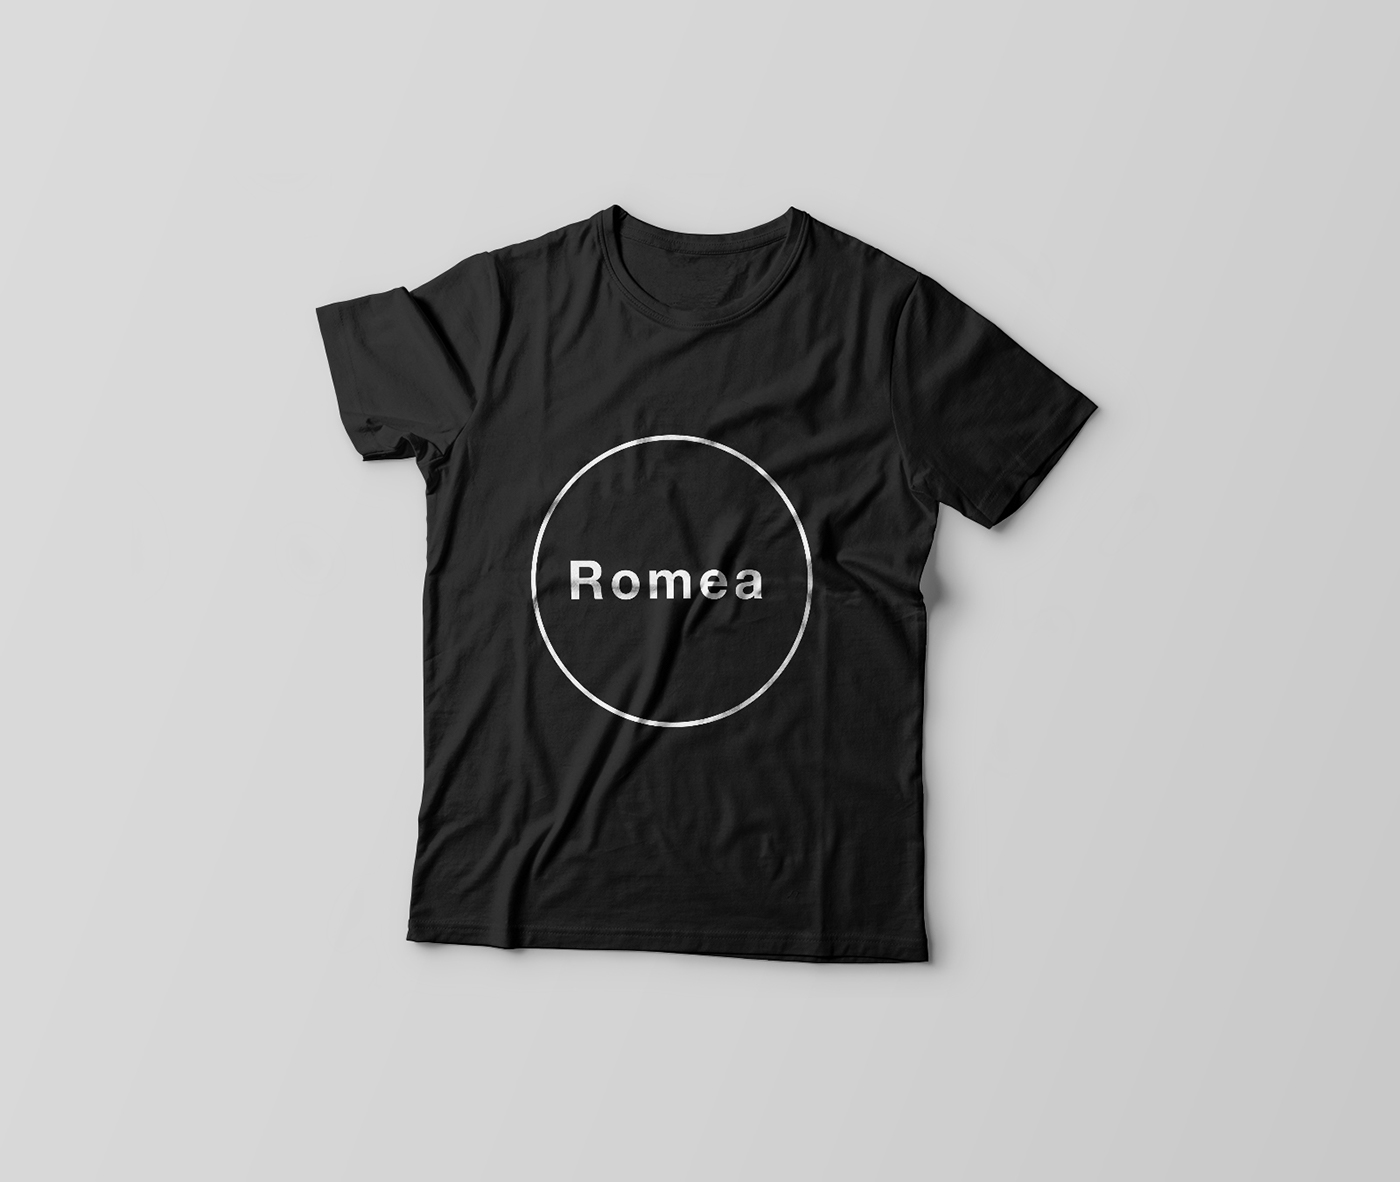 Romea / brand image & artwork on Behance